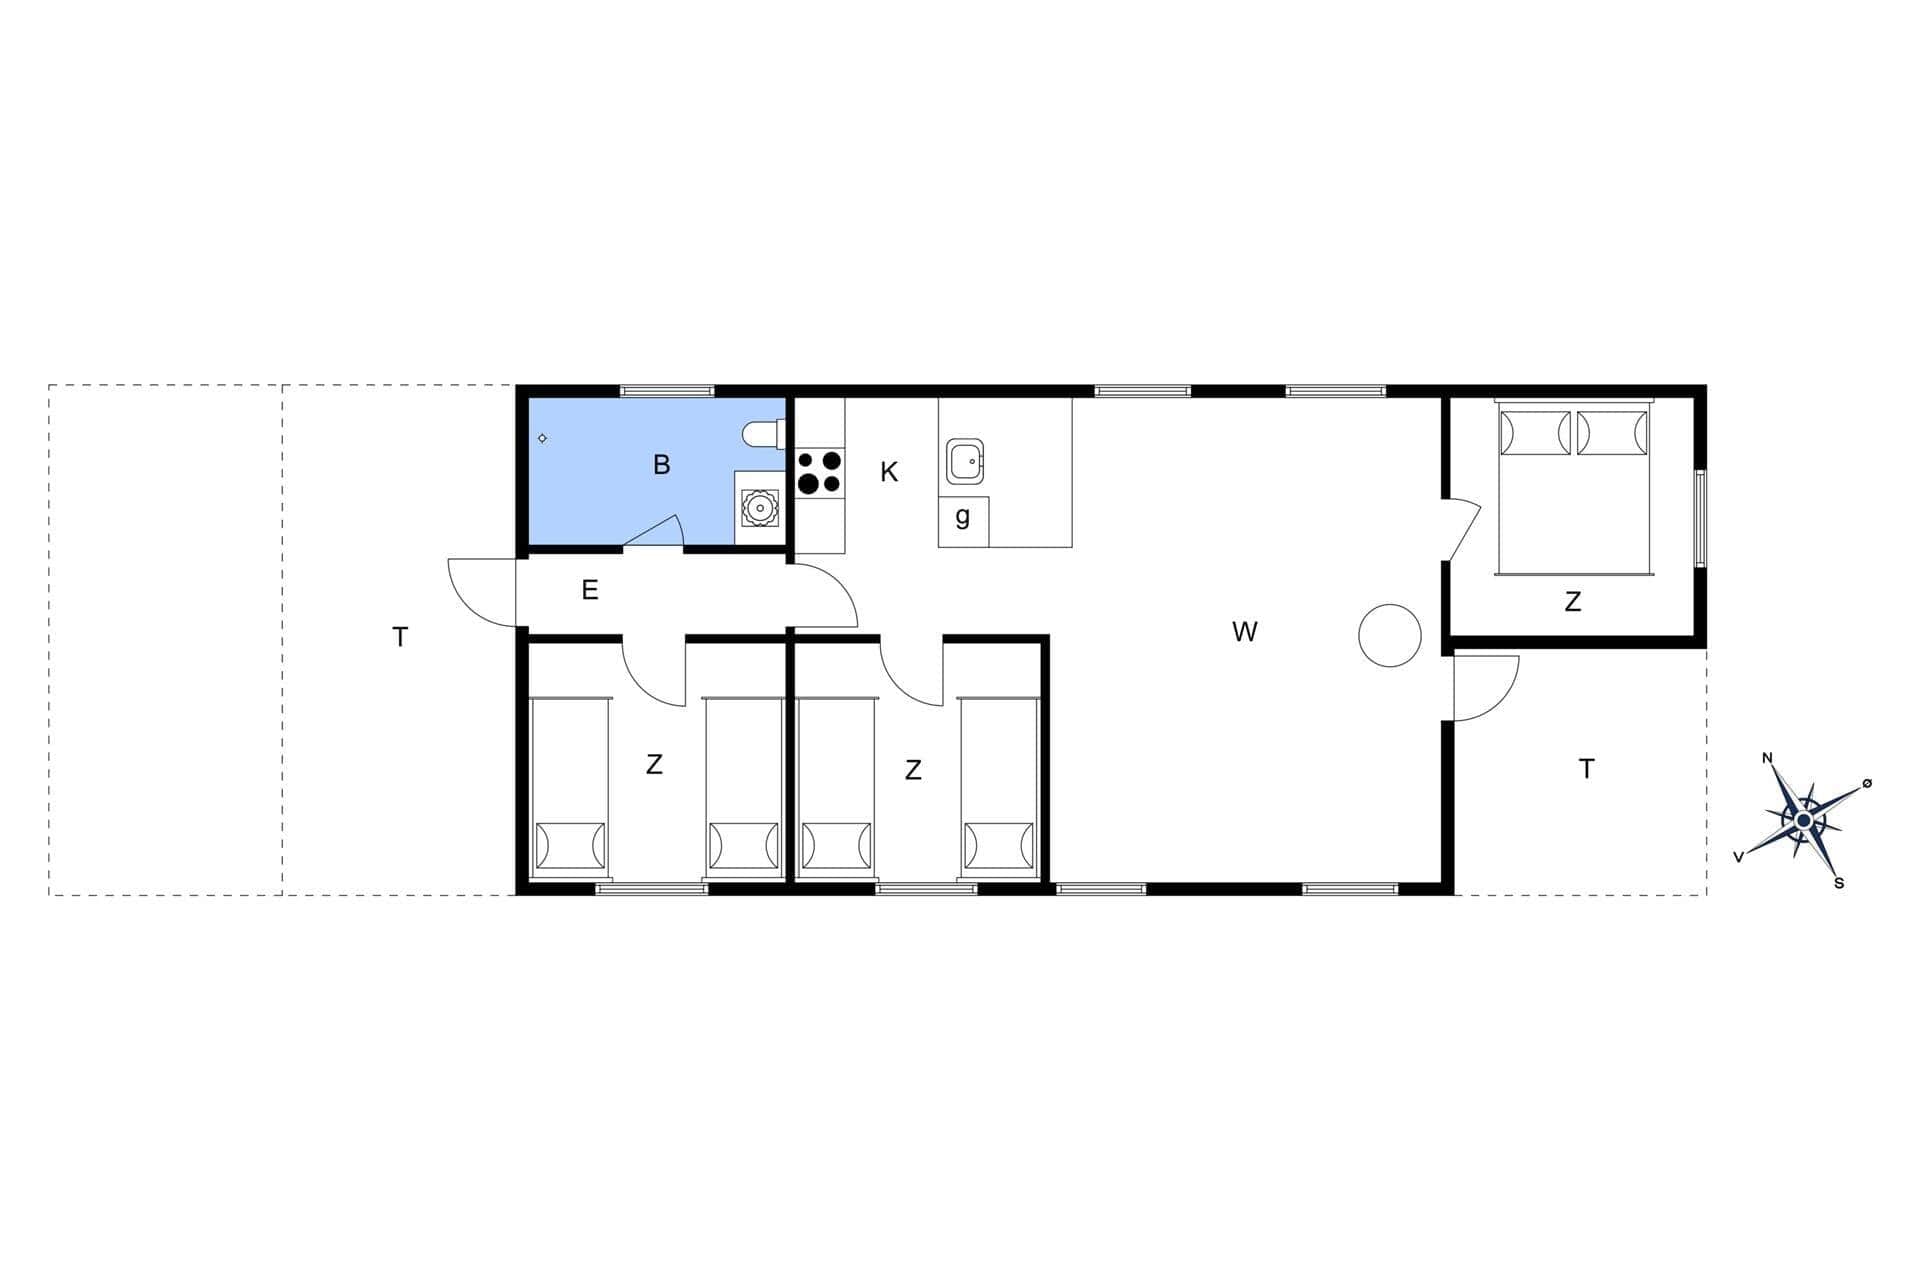 Interior 5-3 Holiday-home L16154, Ramshule 54, DK - 9640 Farsø